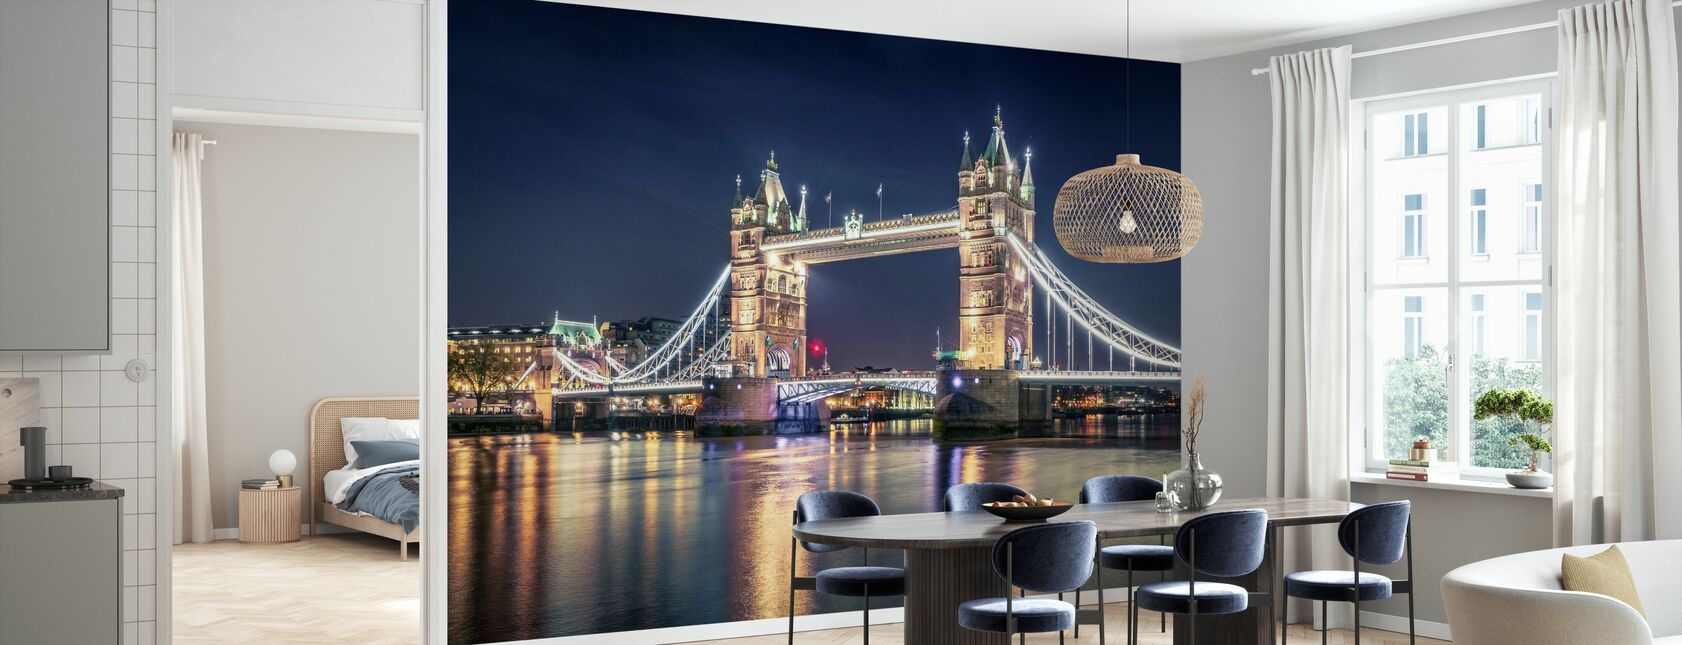 Night at the Tower Bridge - Wallpaper - Kitchen